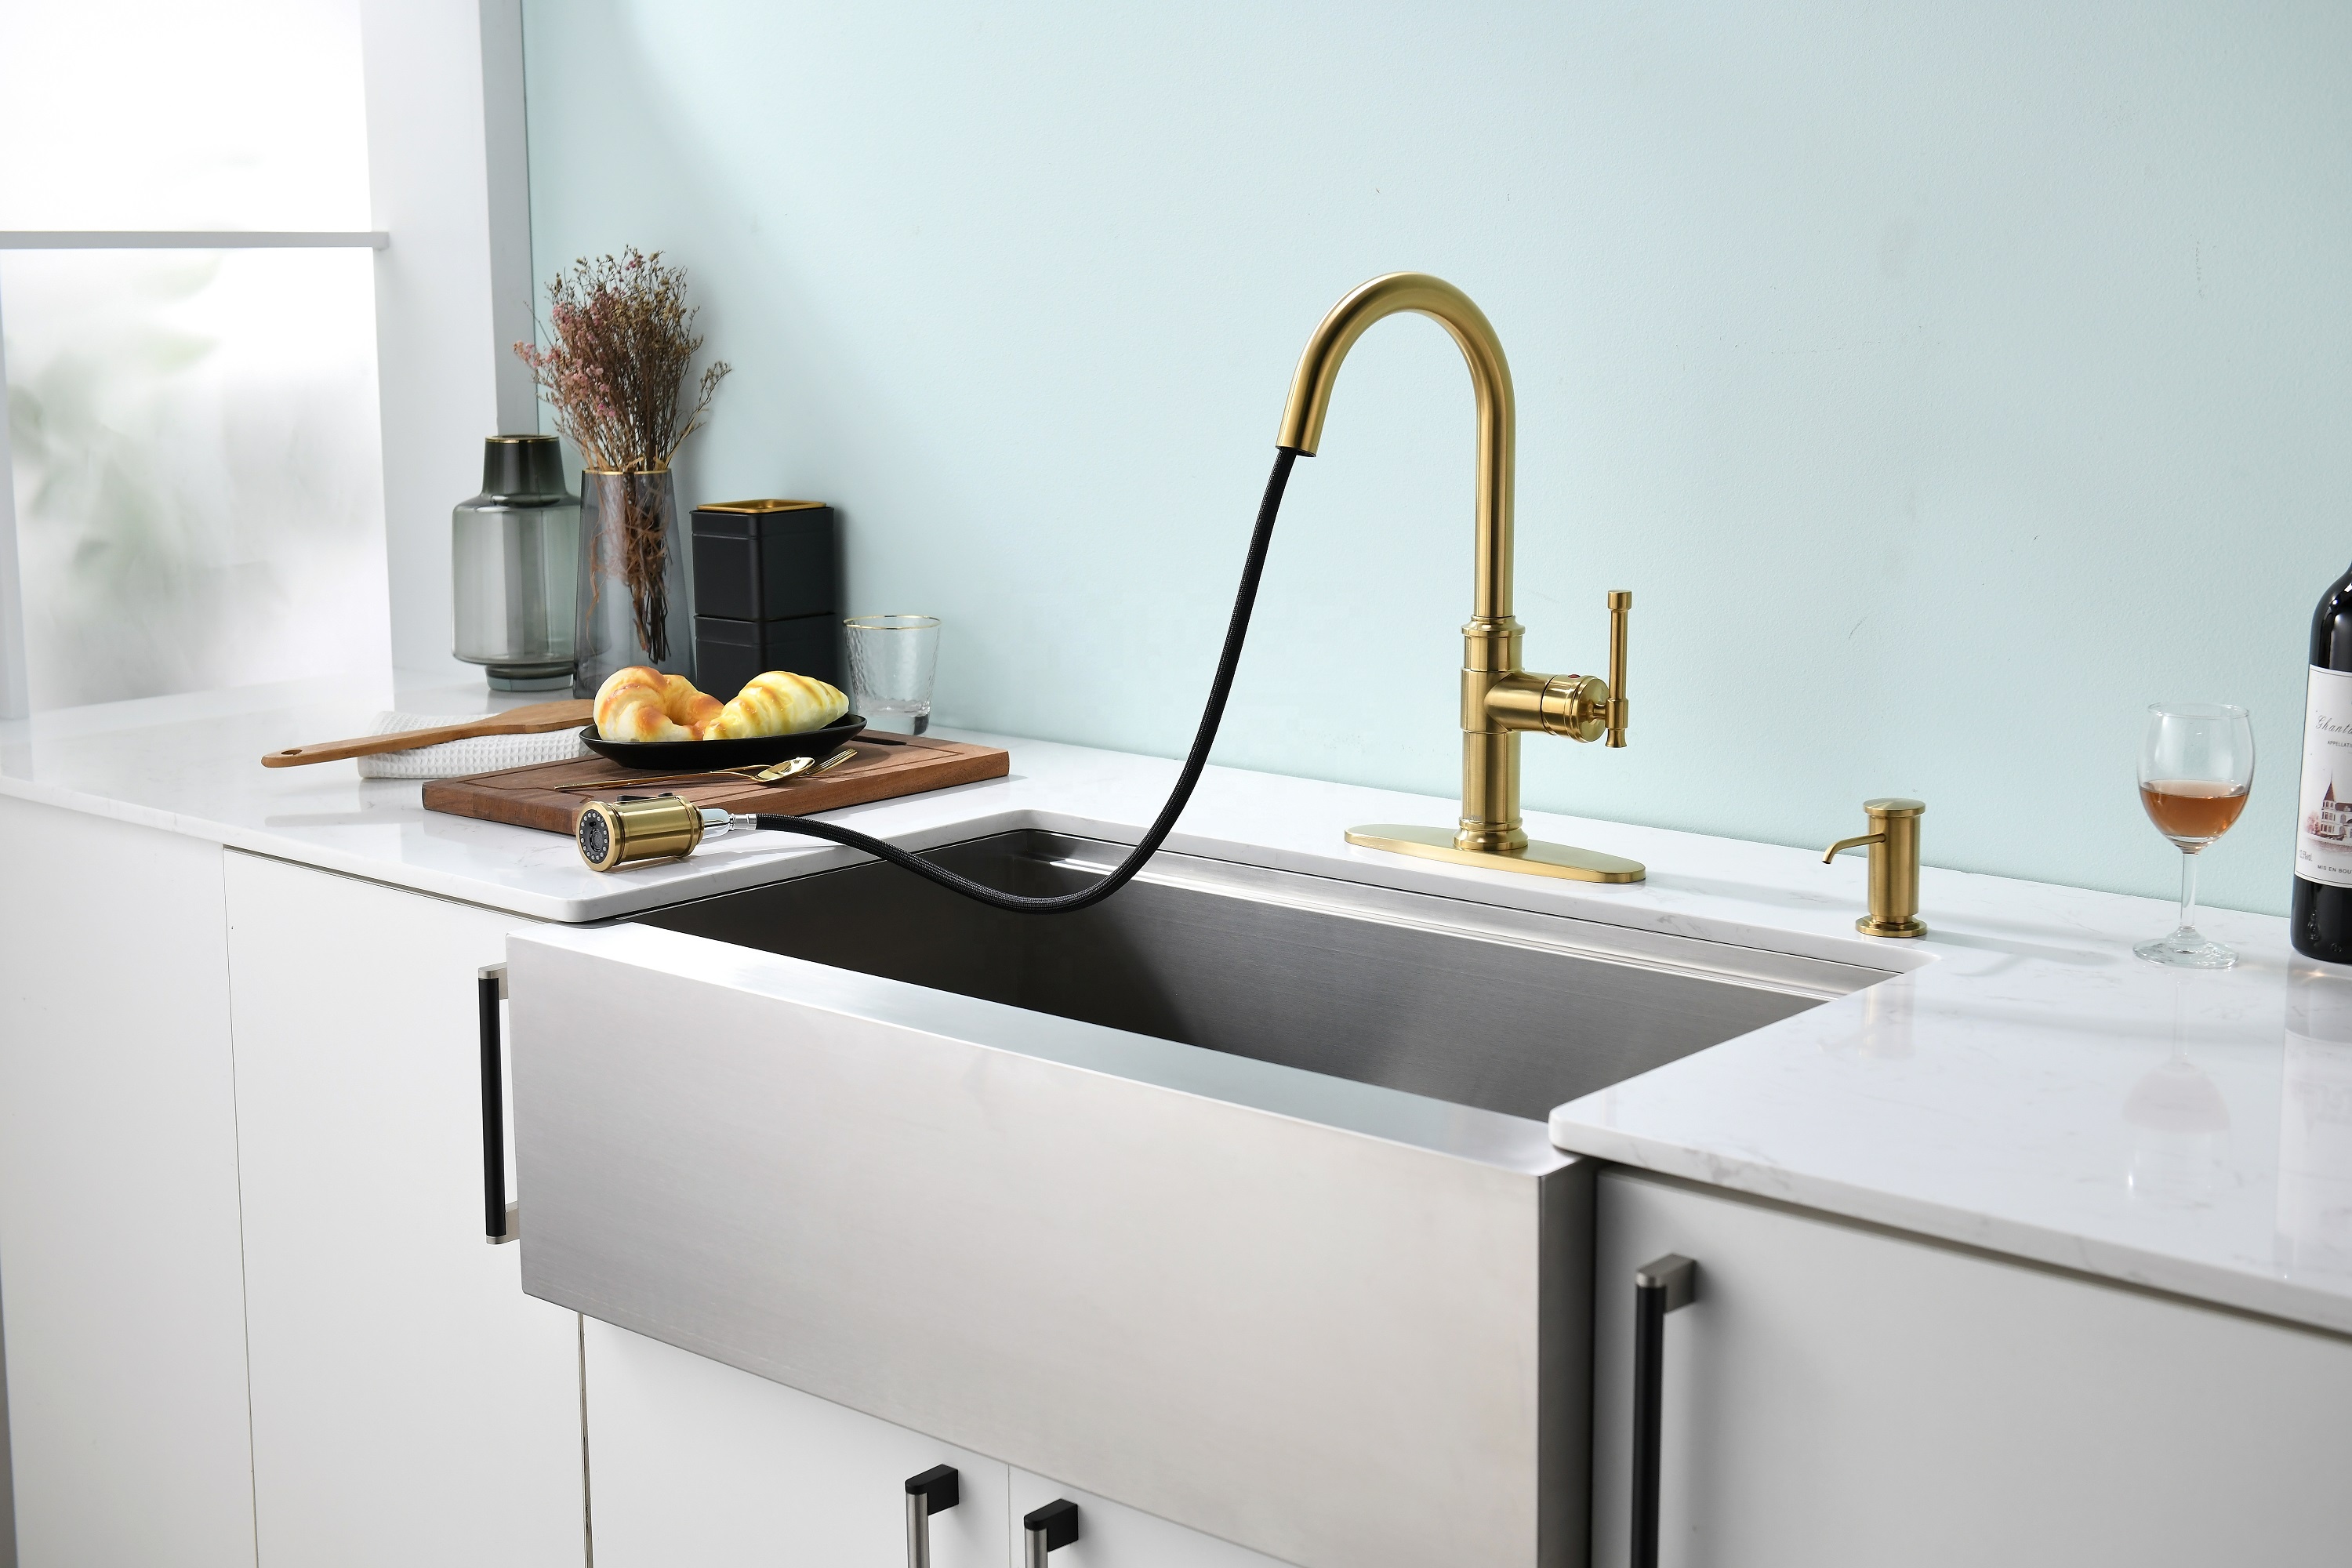 3 Way Household Kitchen Sink Faucet Spray Mixer Sink Kitchen Tap Kitchen Faucet Gold